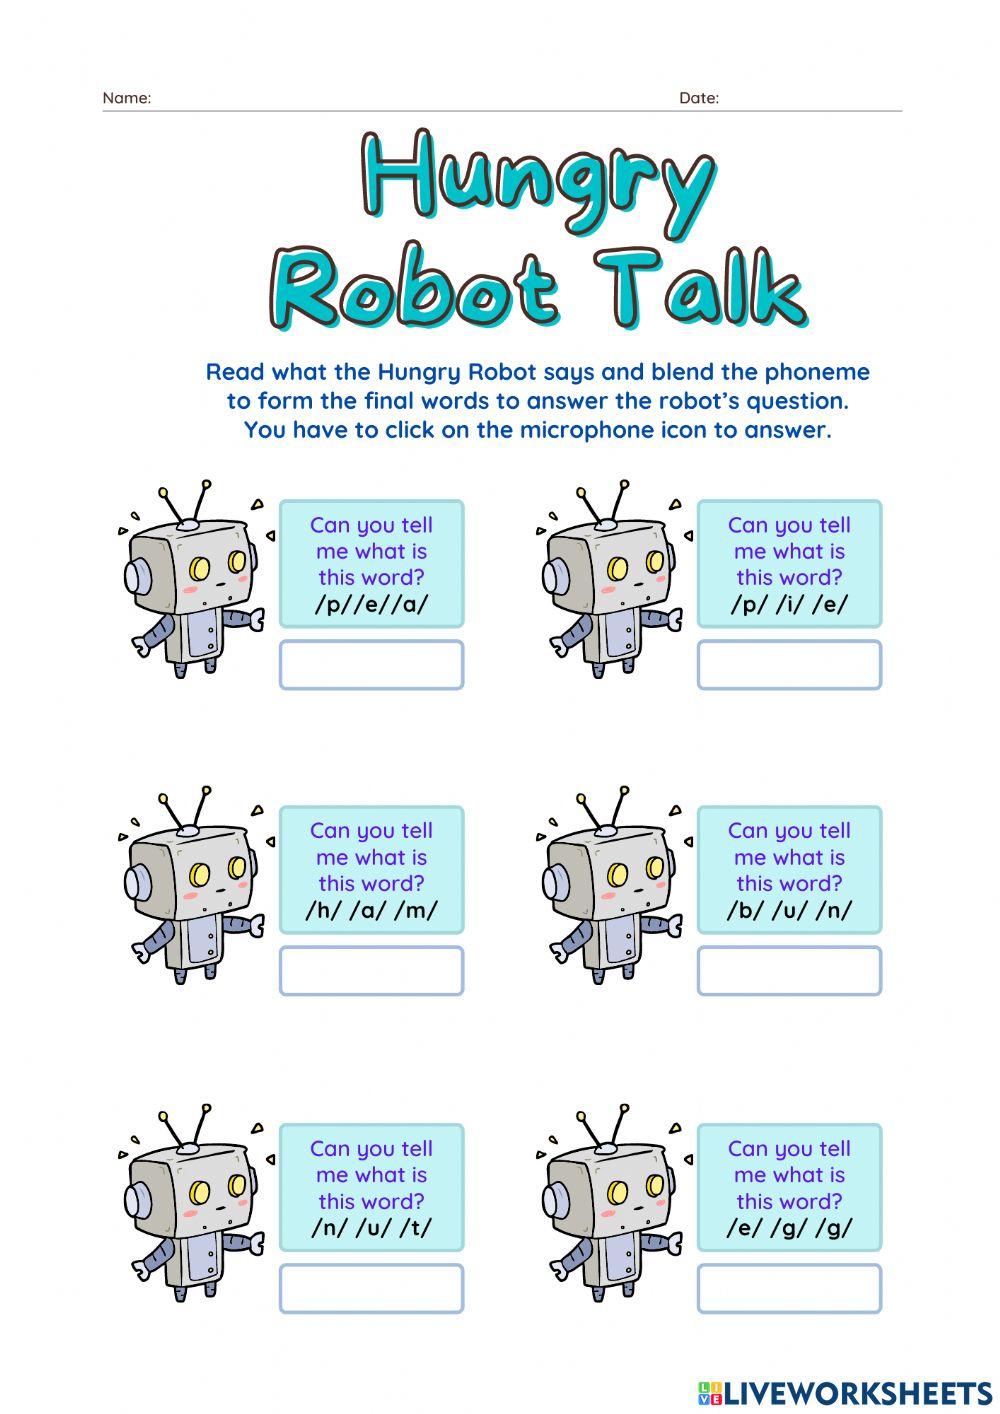 Hungry Robot Talk worksheet